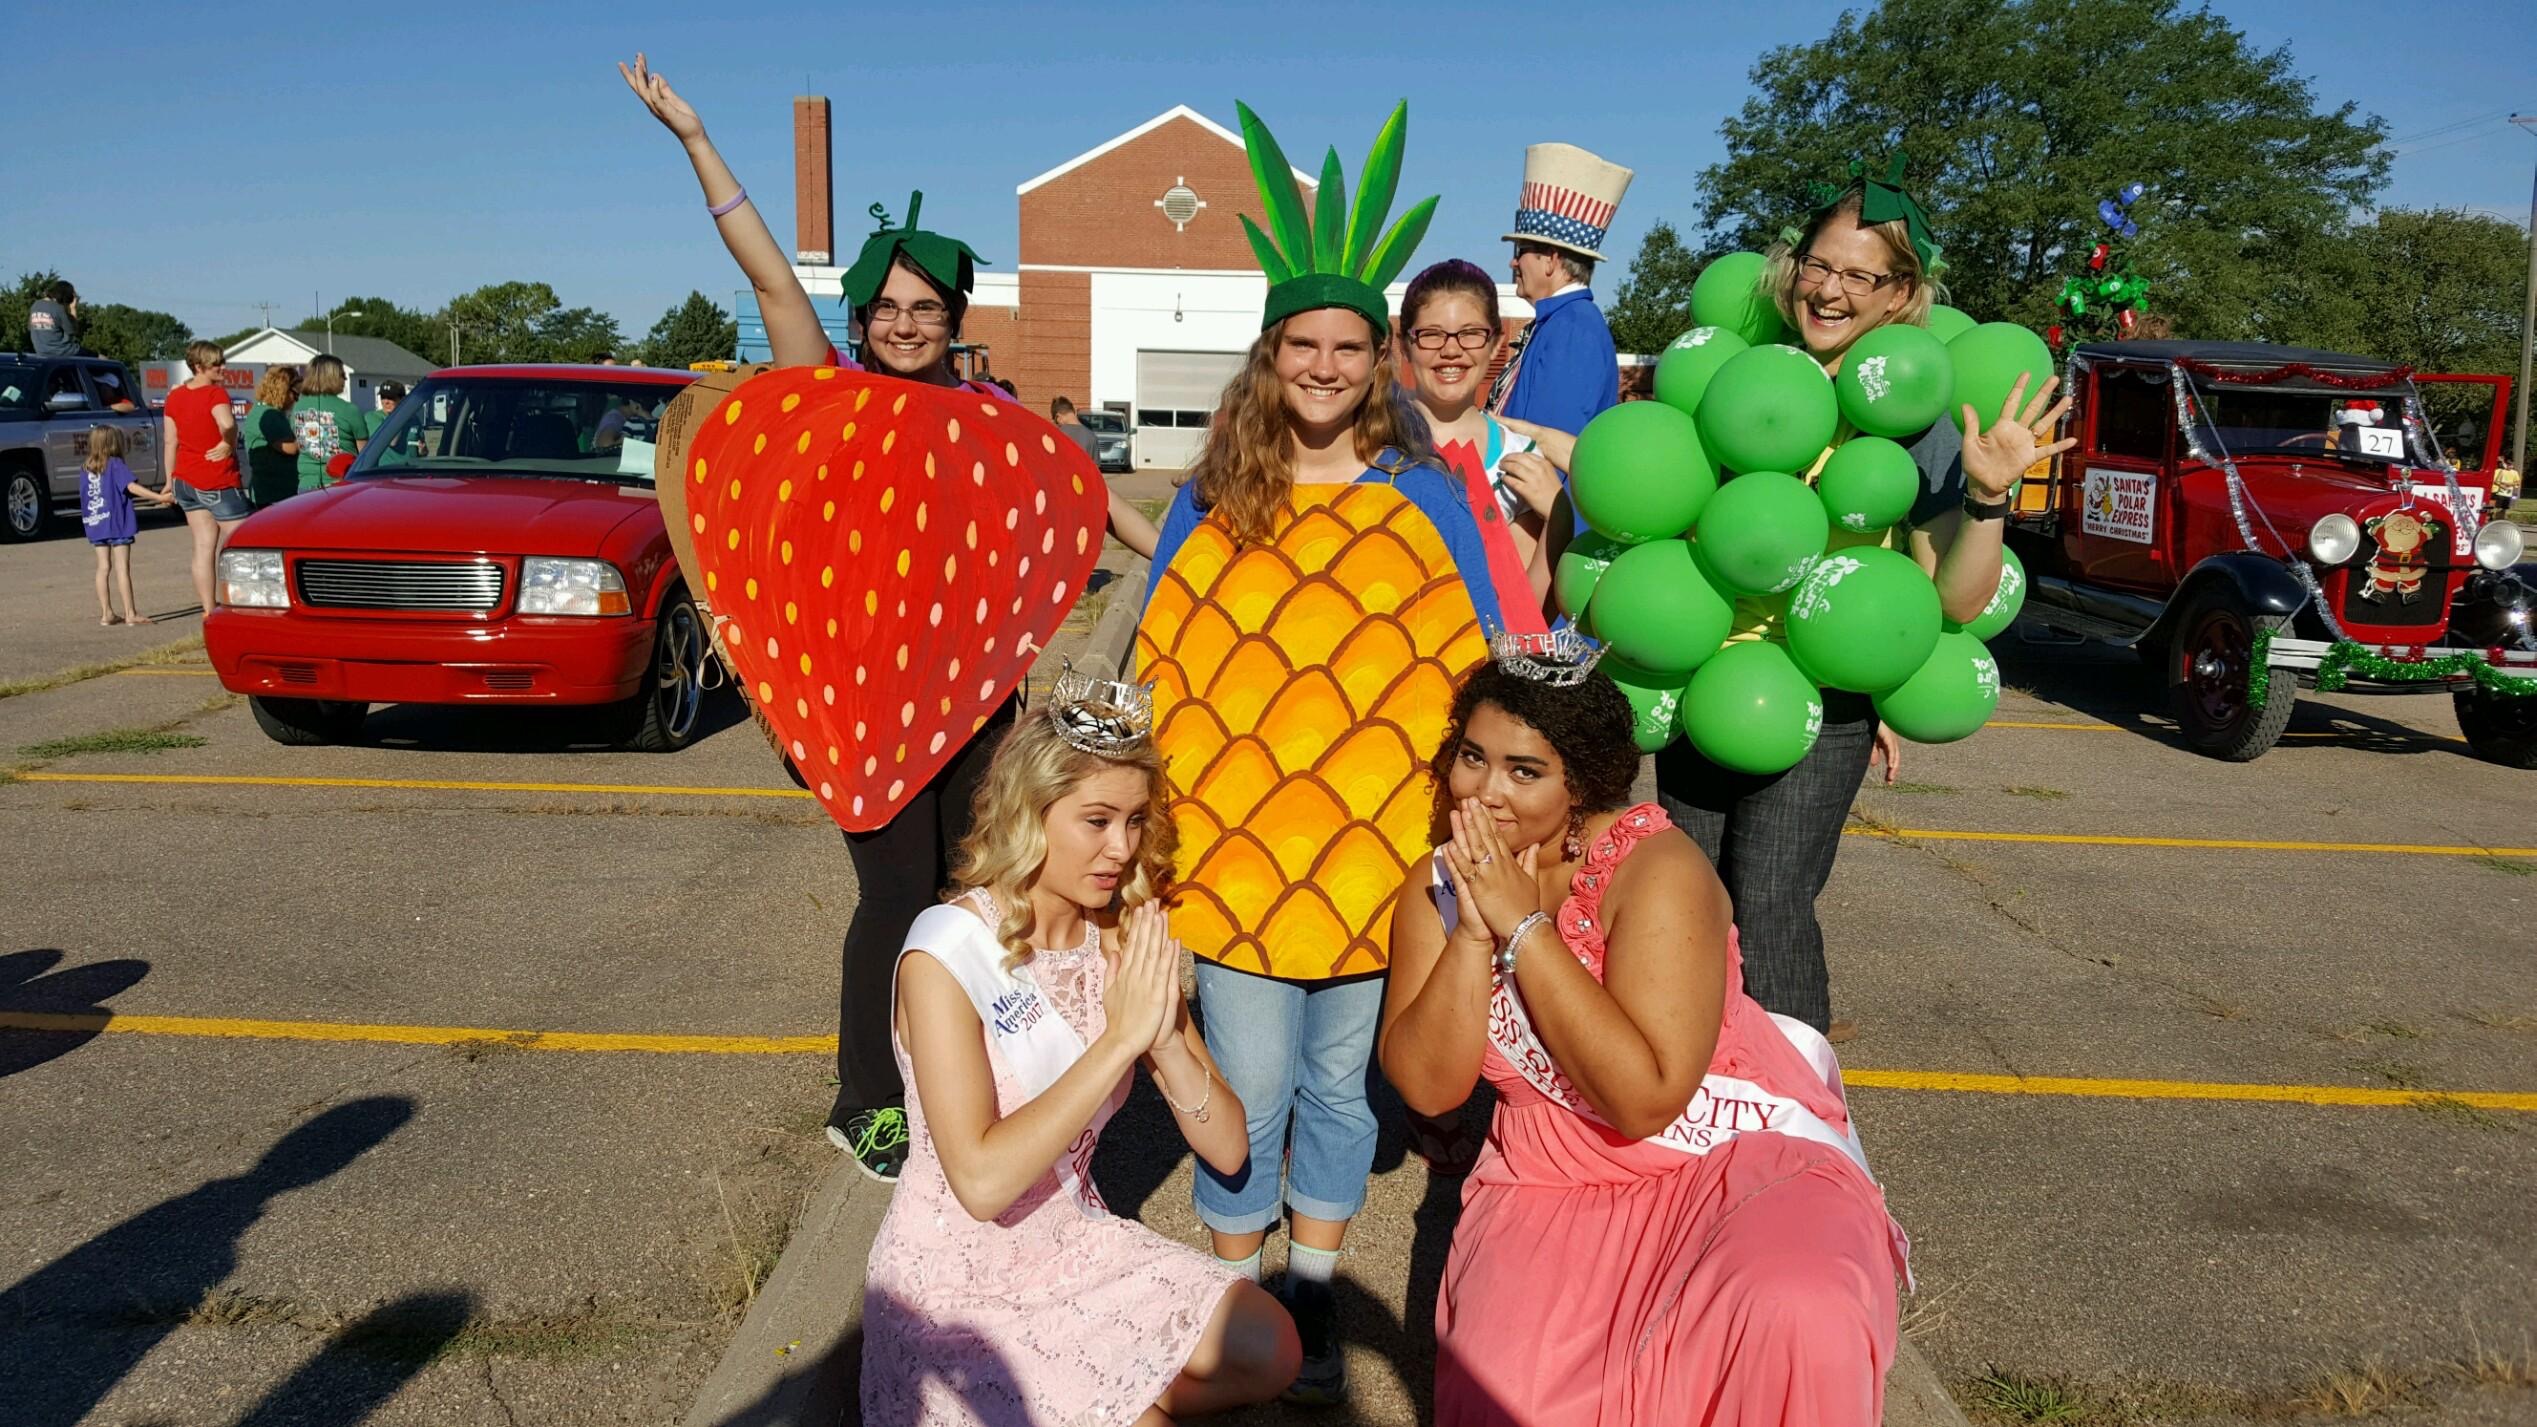 The Fruit Squad